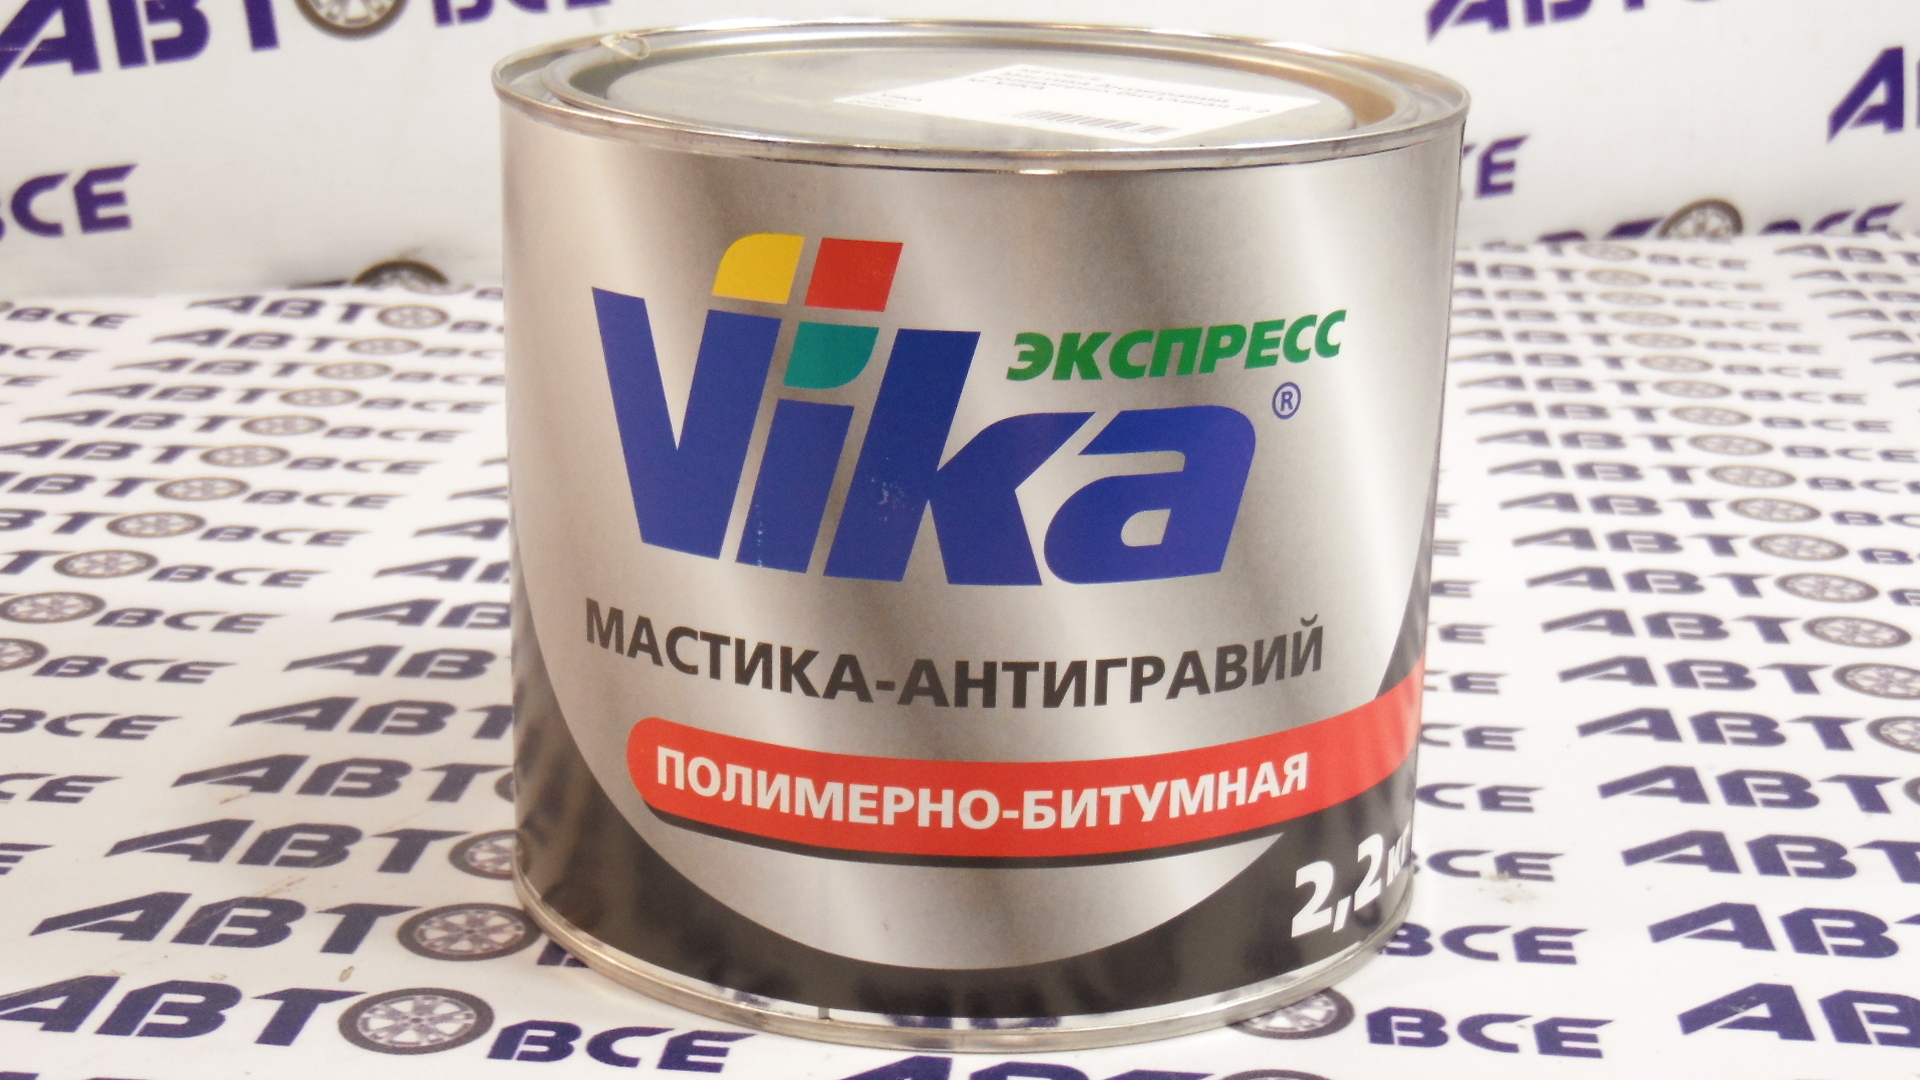 Мастика Антигравий полимерно-битумная 2,2 кг VIKA